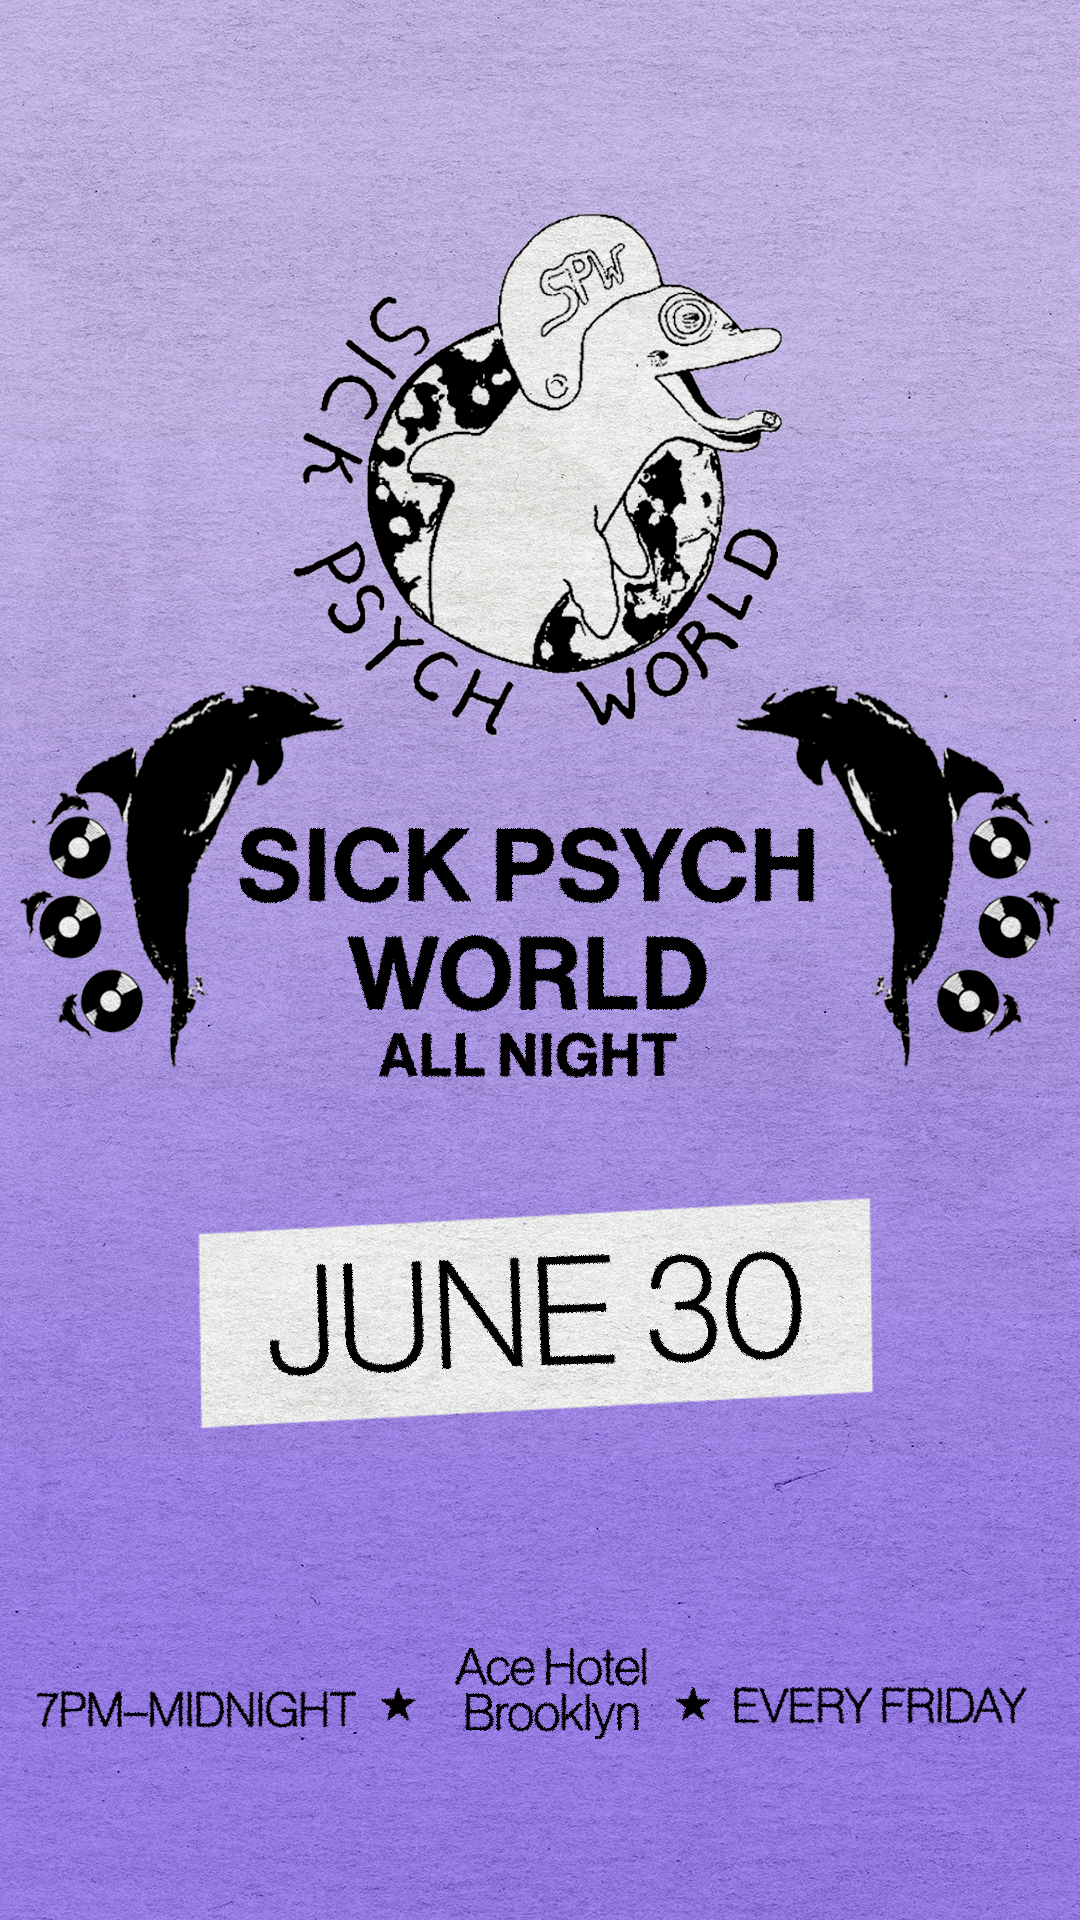 Sick Psych world promo flyer